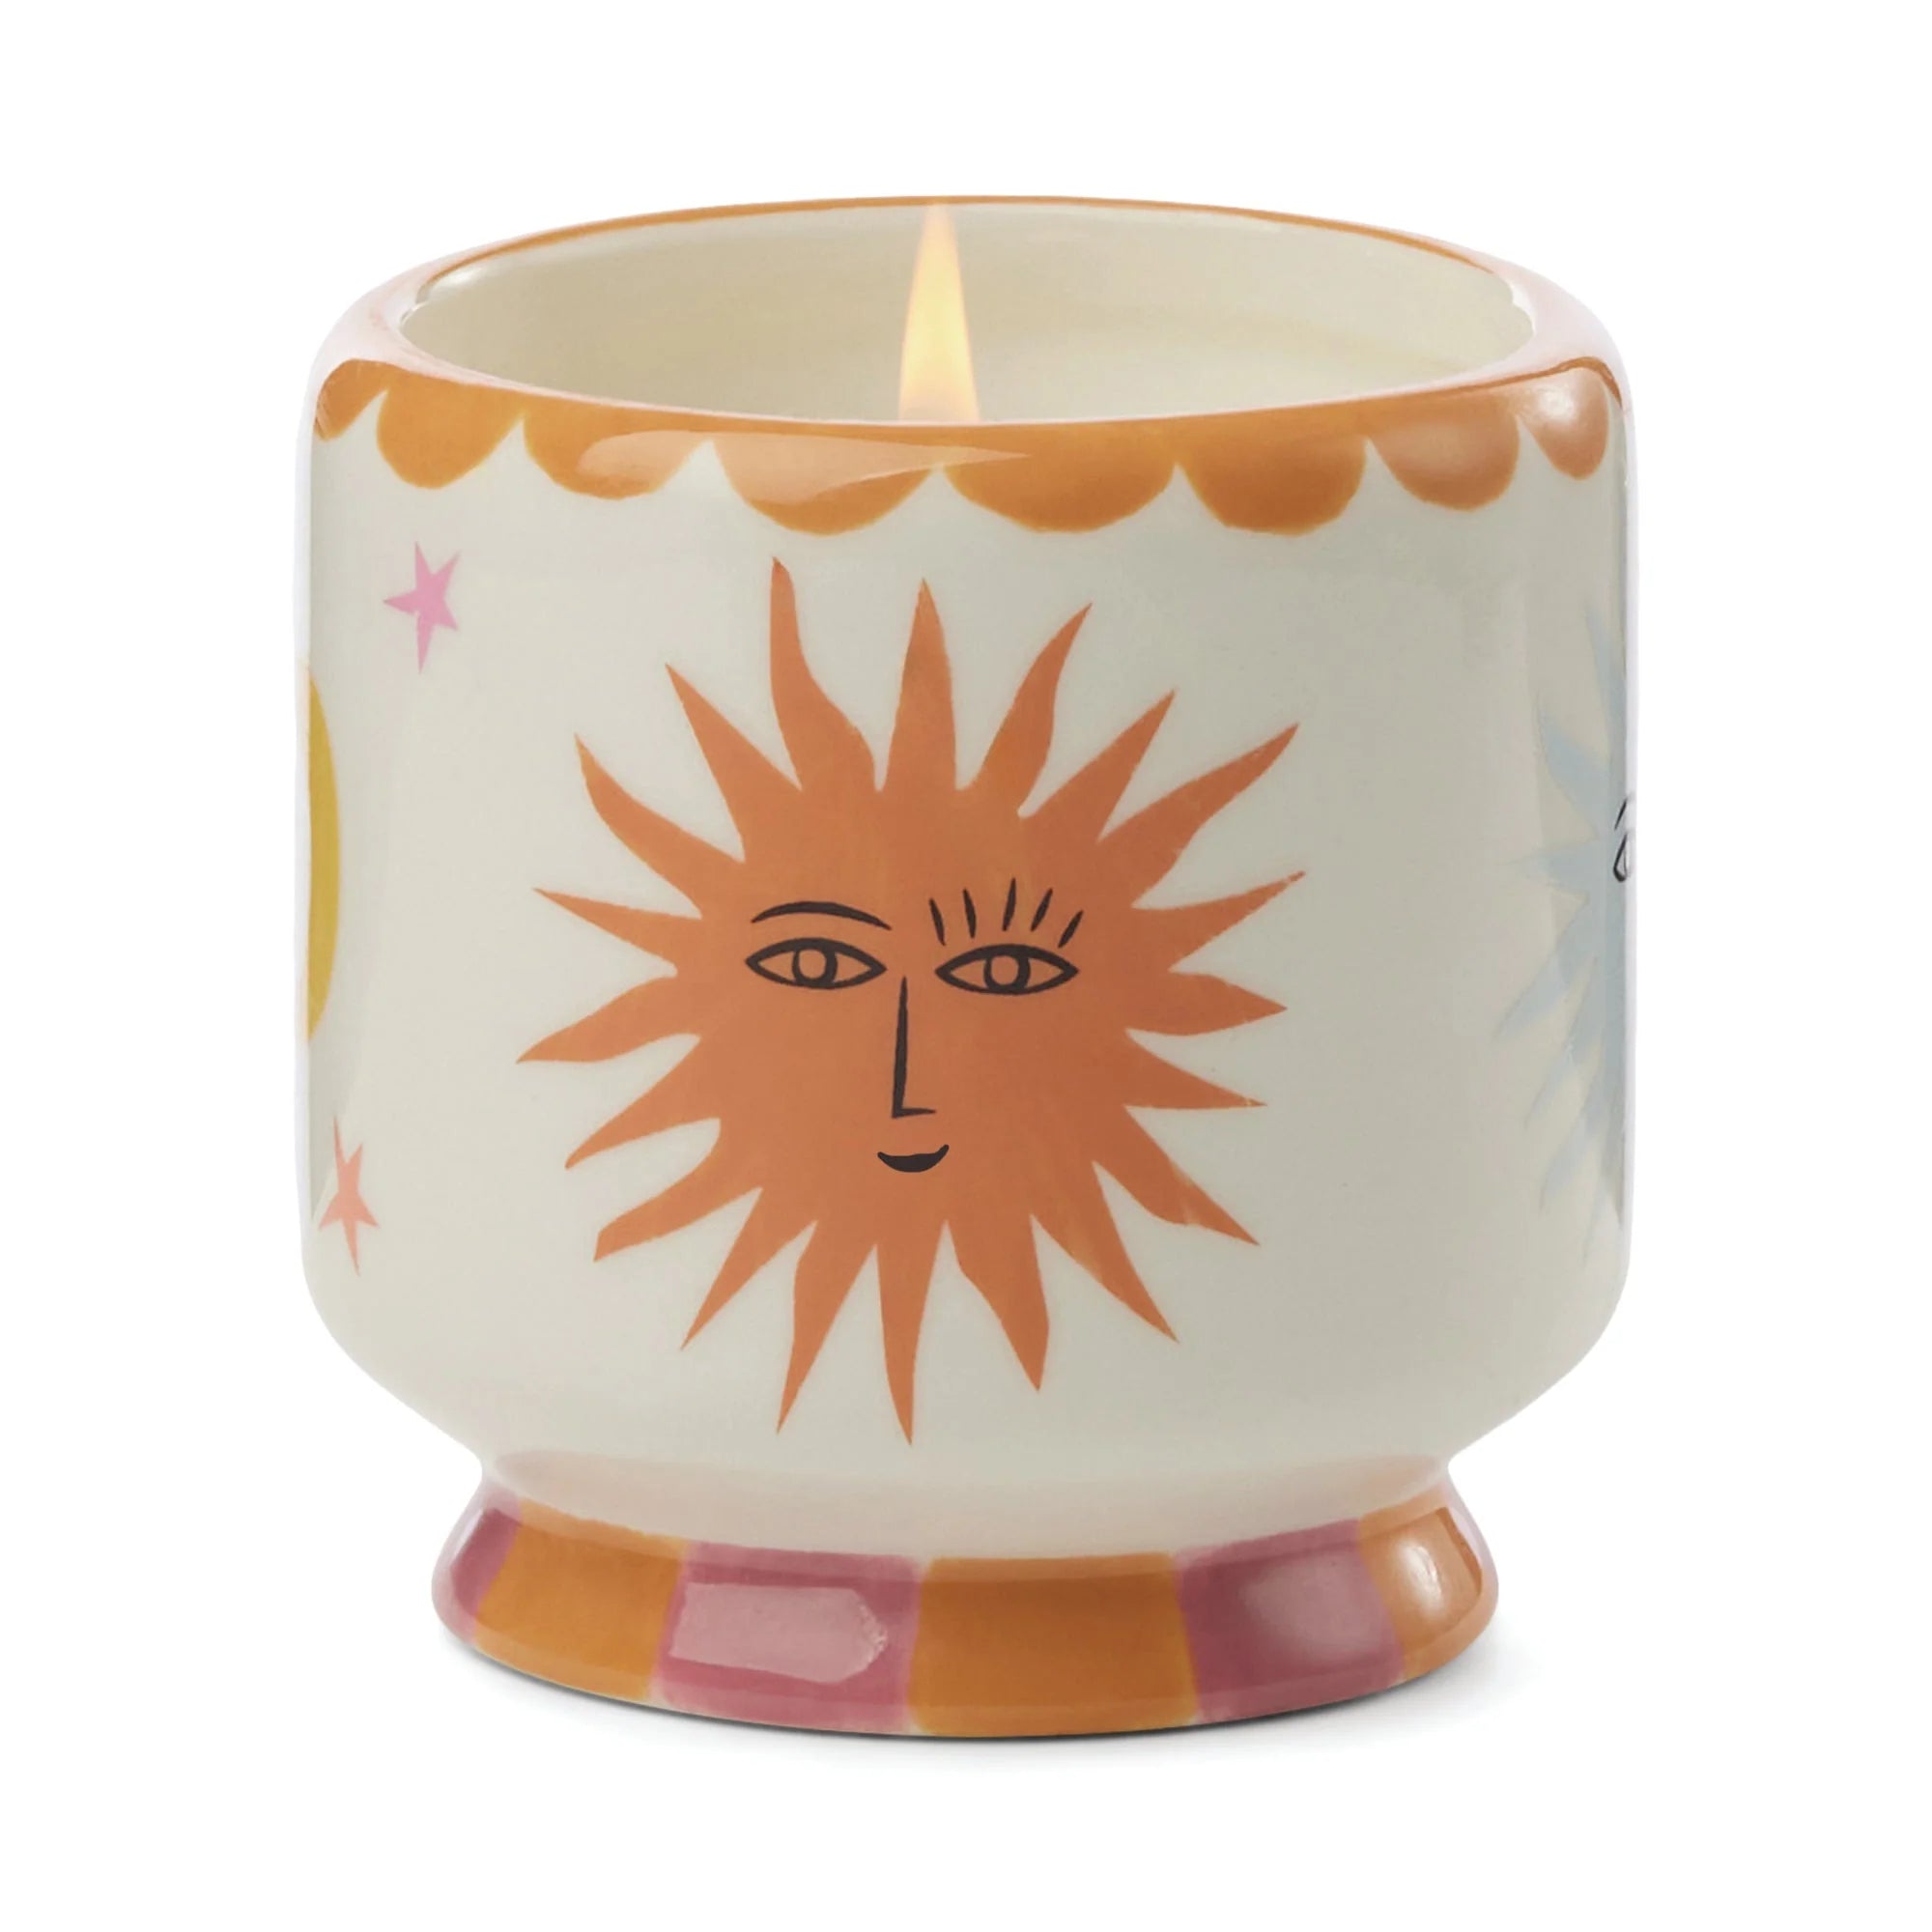 Adopo Ceramic Candle - Sun (Orange Blossom)